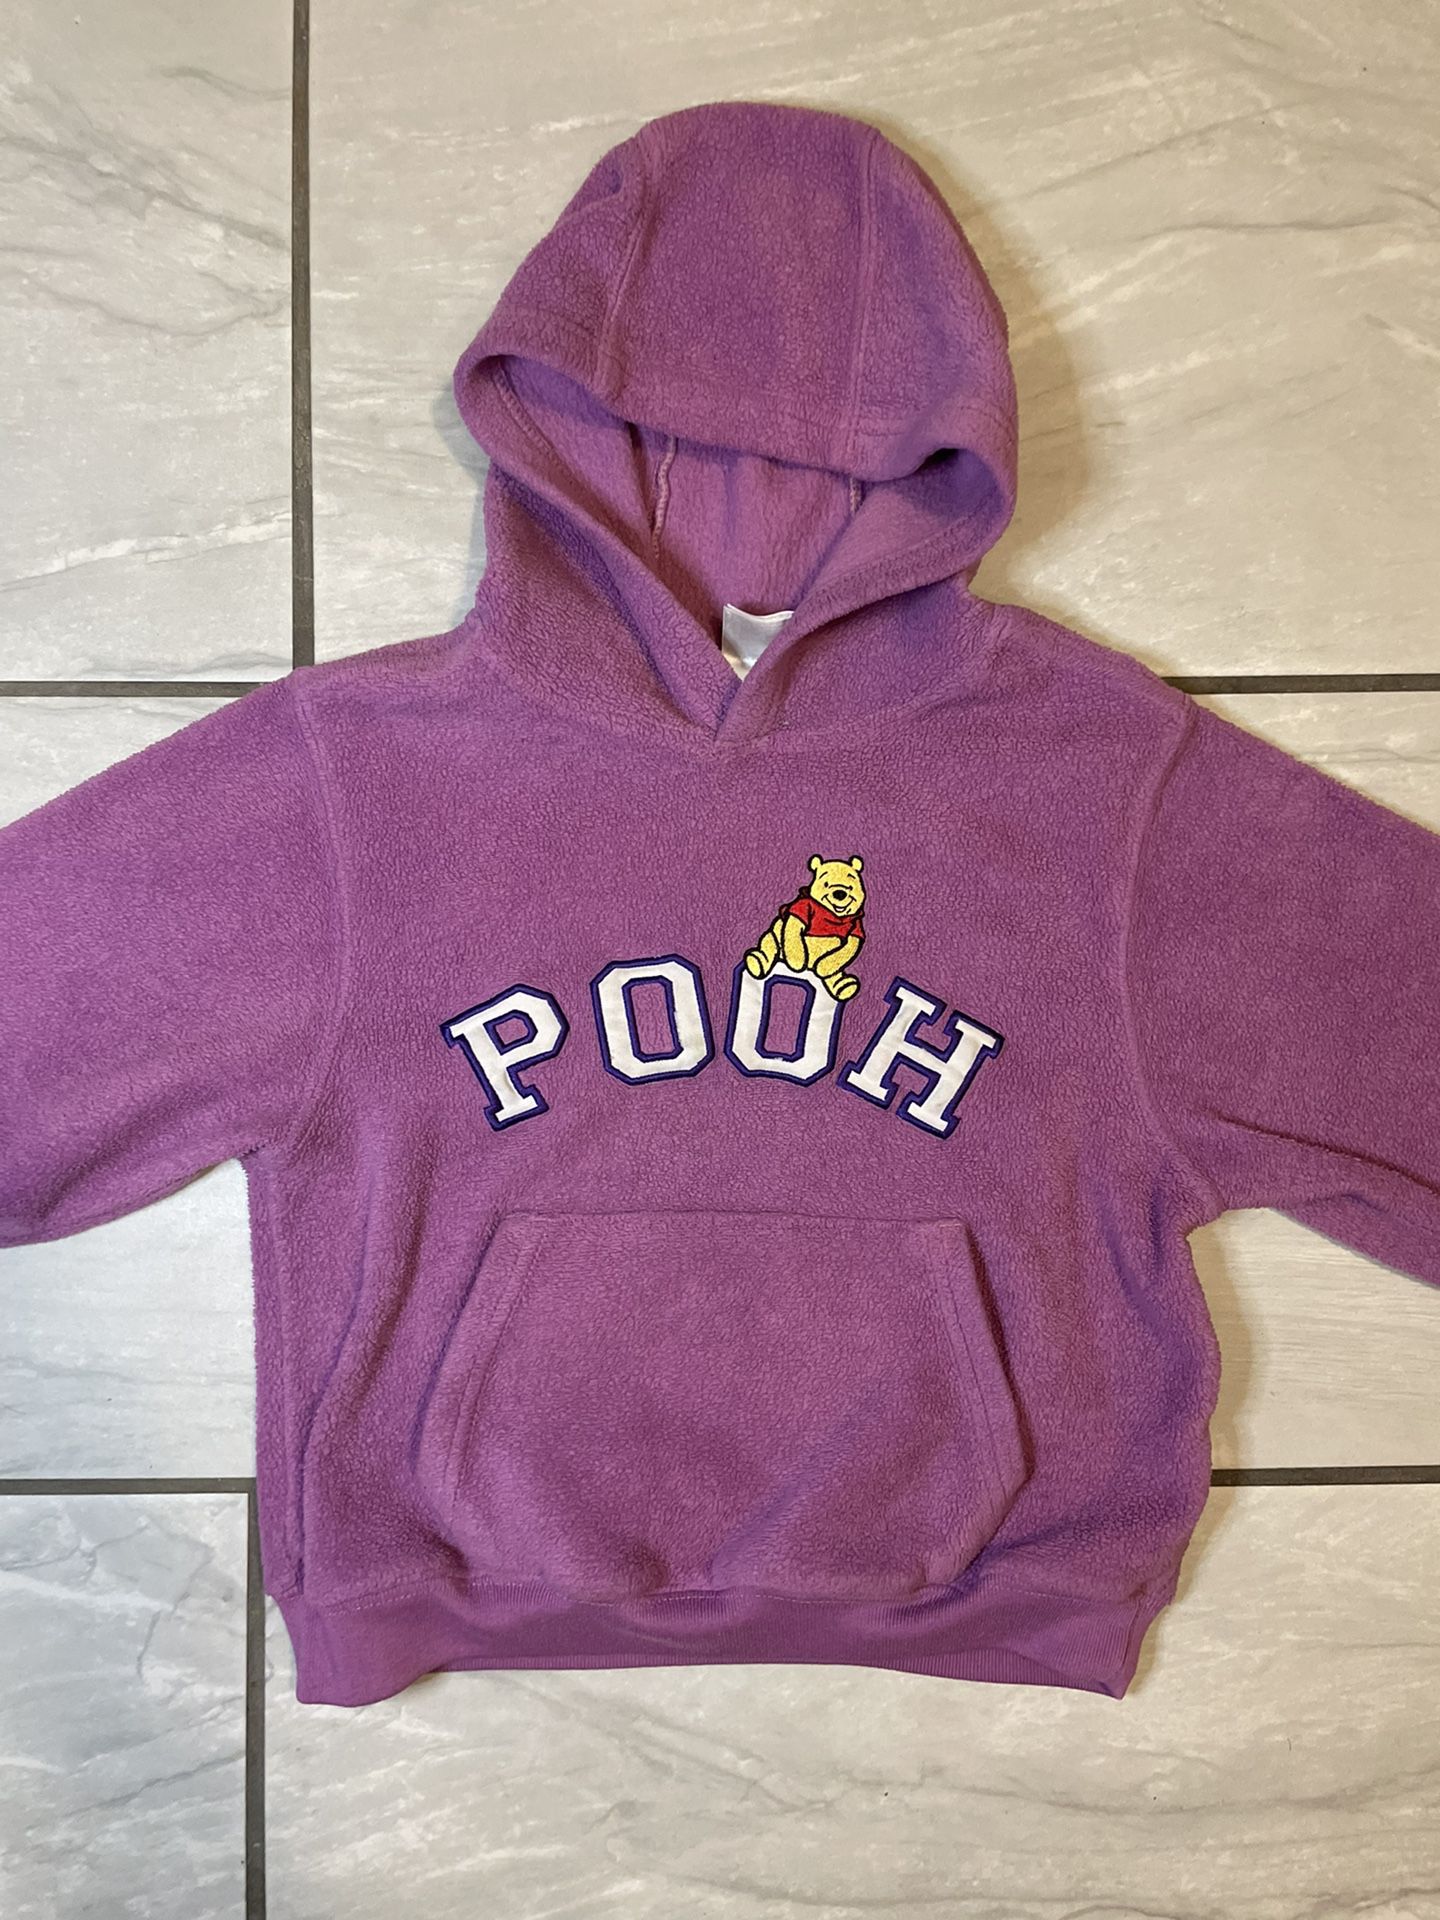 Disney Store Youth Girls Size XS Hoodie Sweatshirt Winnie The Pooh Purple